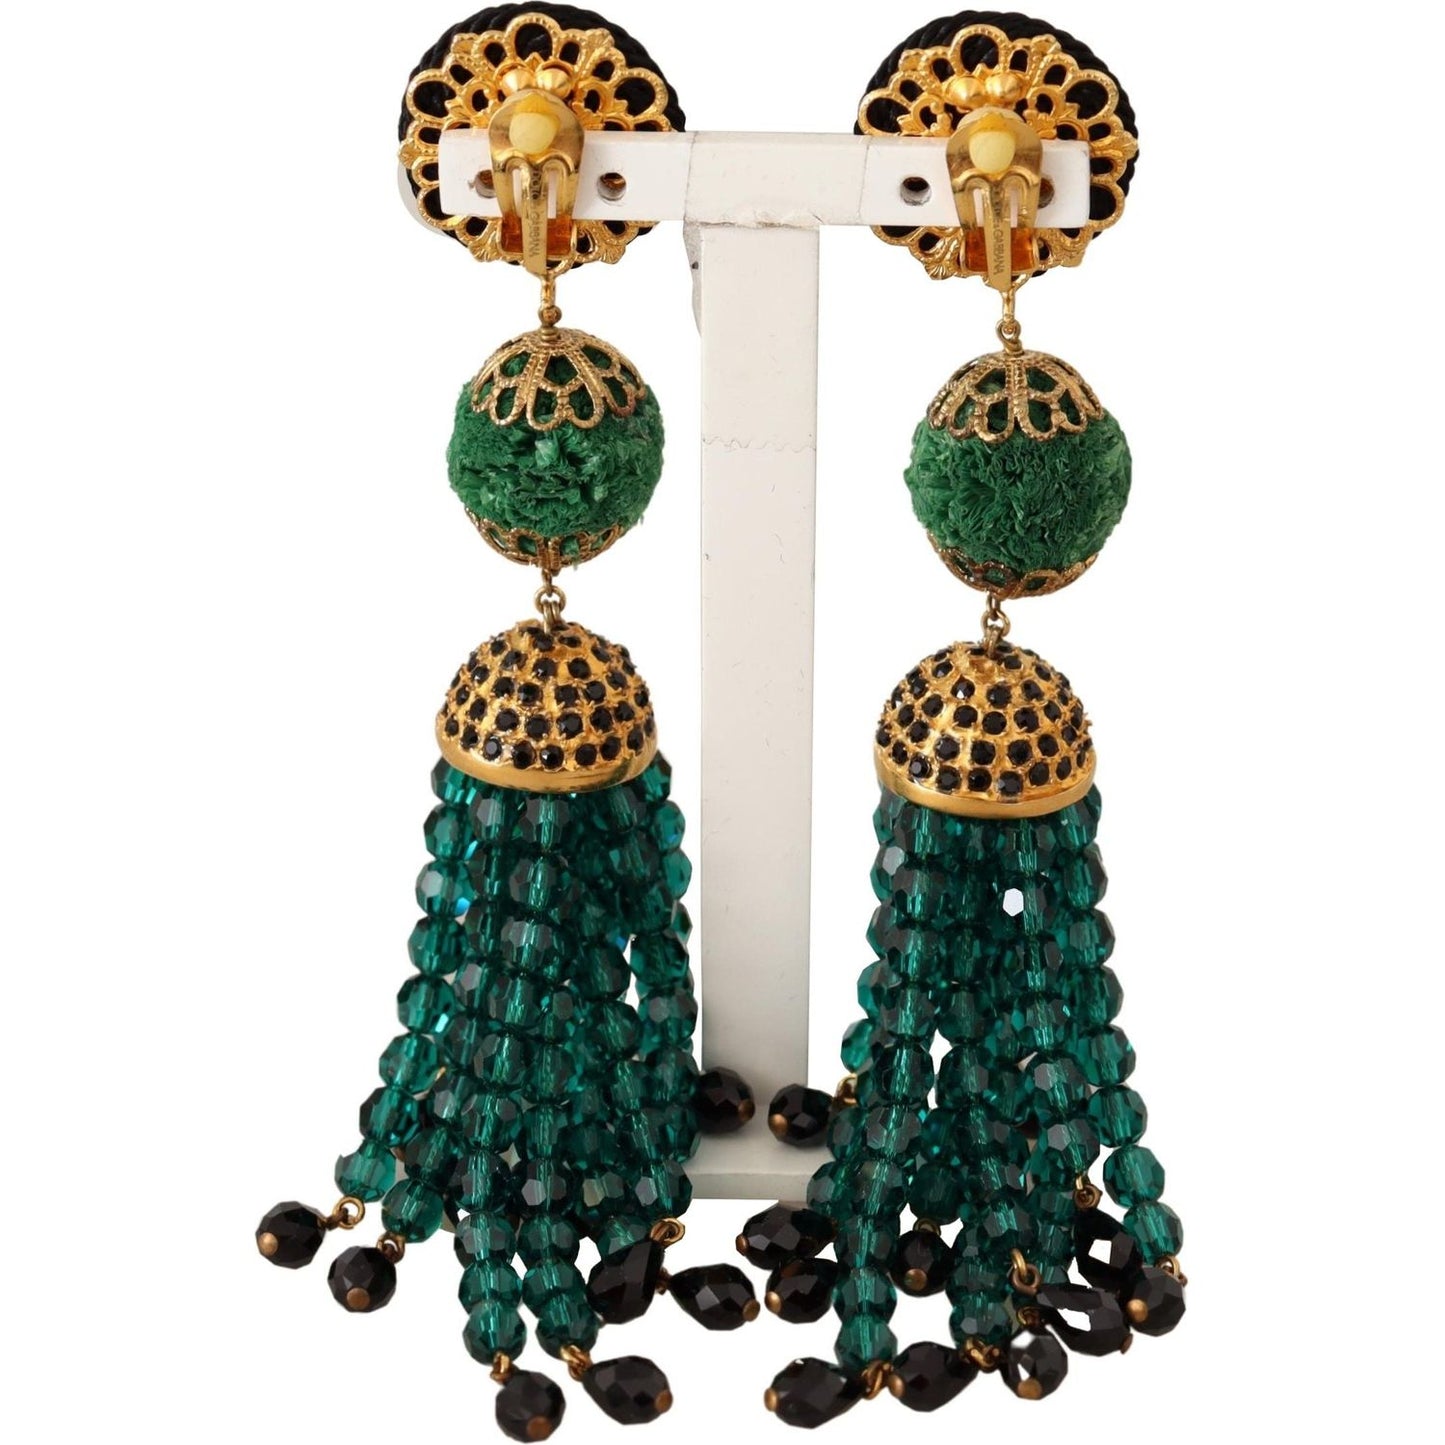 Dolce & Gabbana Elegant Crystal Drop Clip-On Earrings green-crystals-gold-tone-drop-clip-on-dangle-earrings IMG_7622-1-9a307d3e-605.jpg